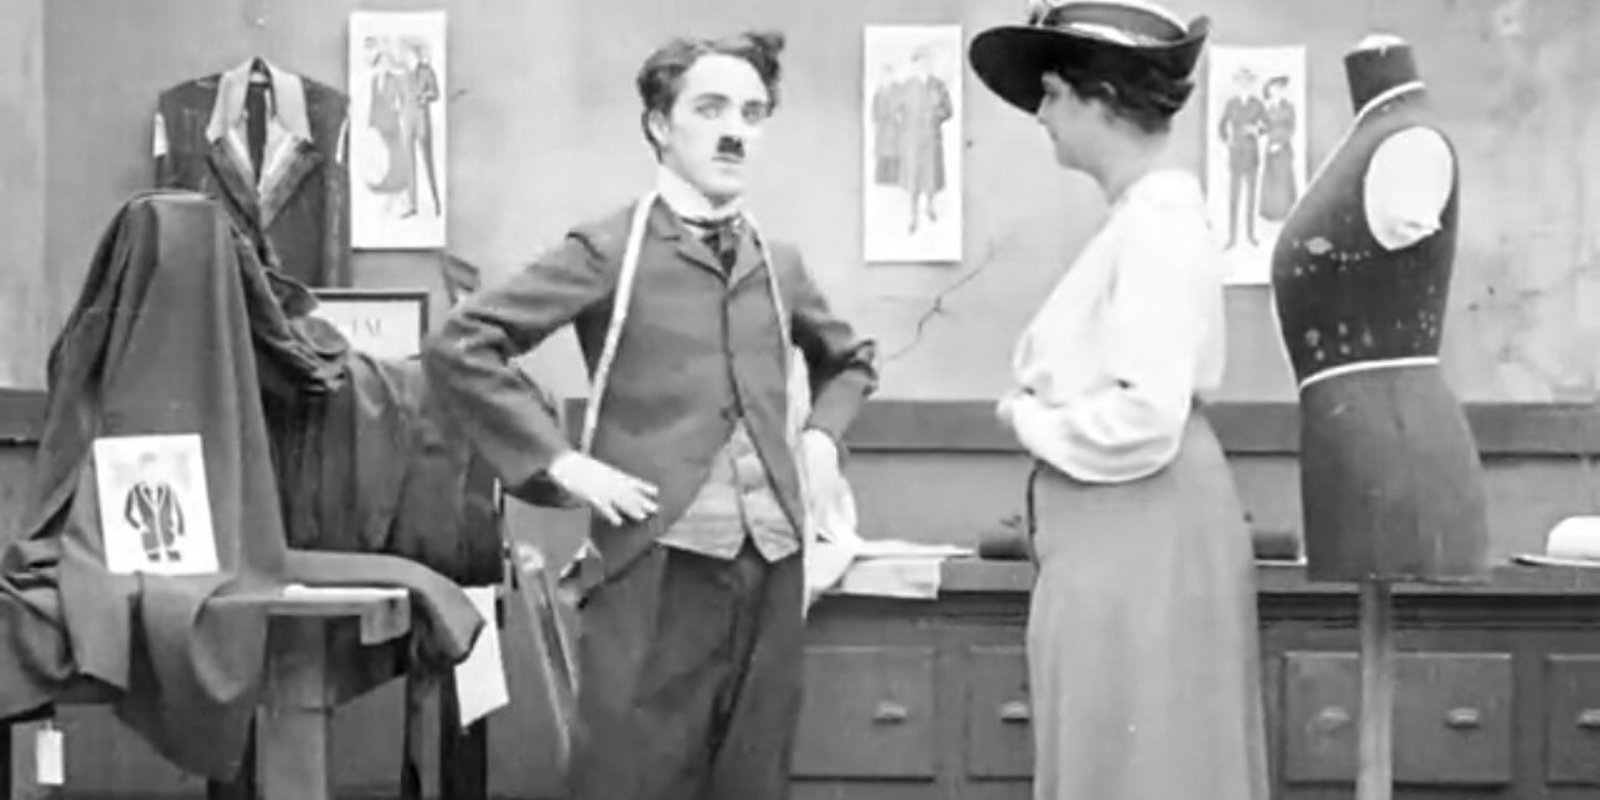 Charlie Chaplin - Volume 4 - The Mutual Comedies 1916